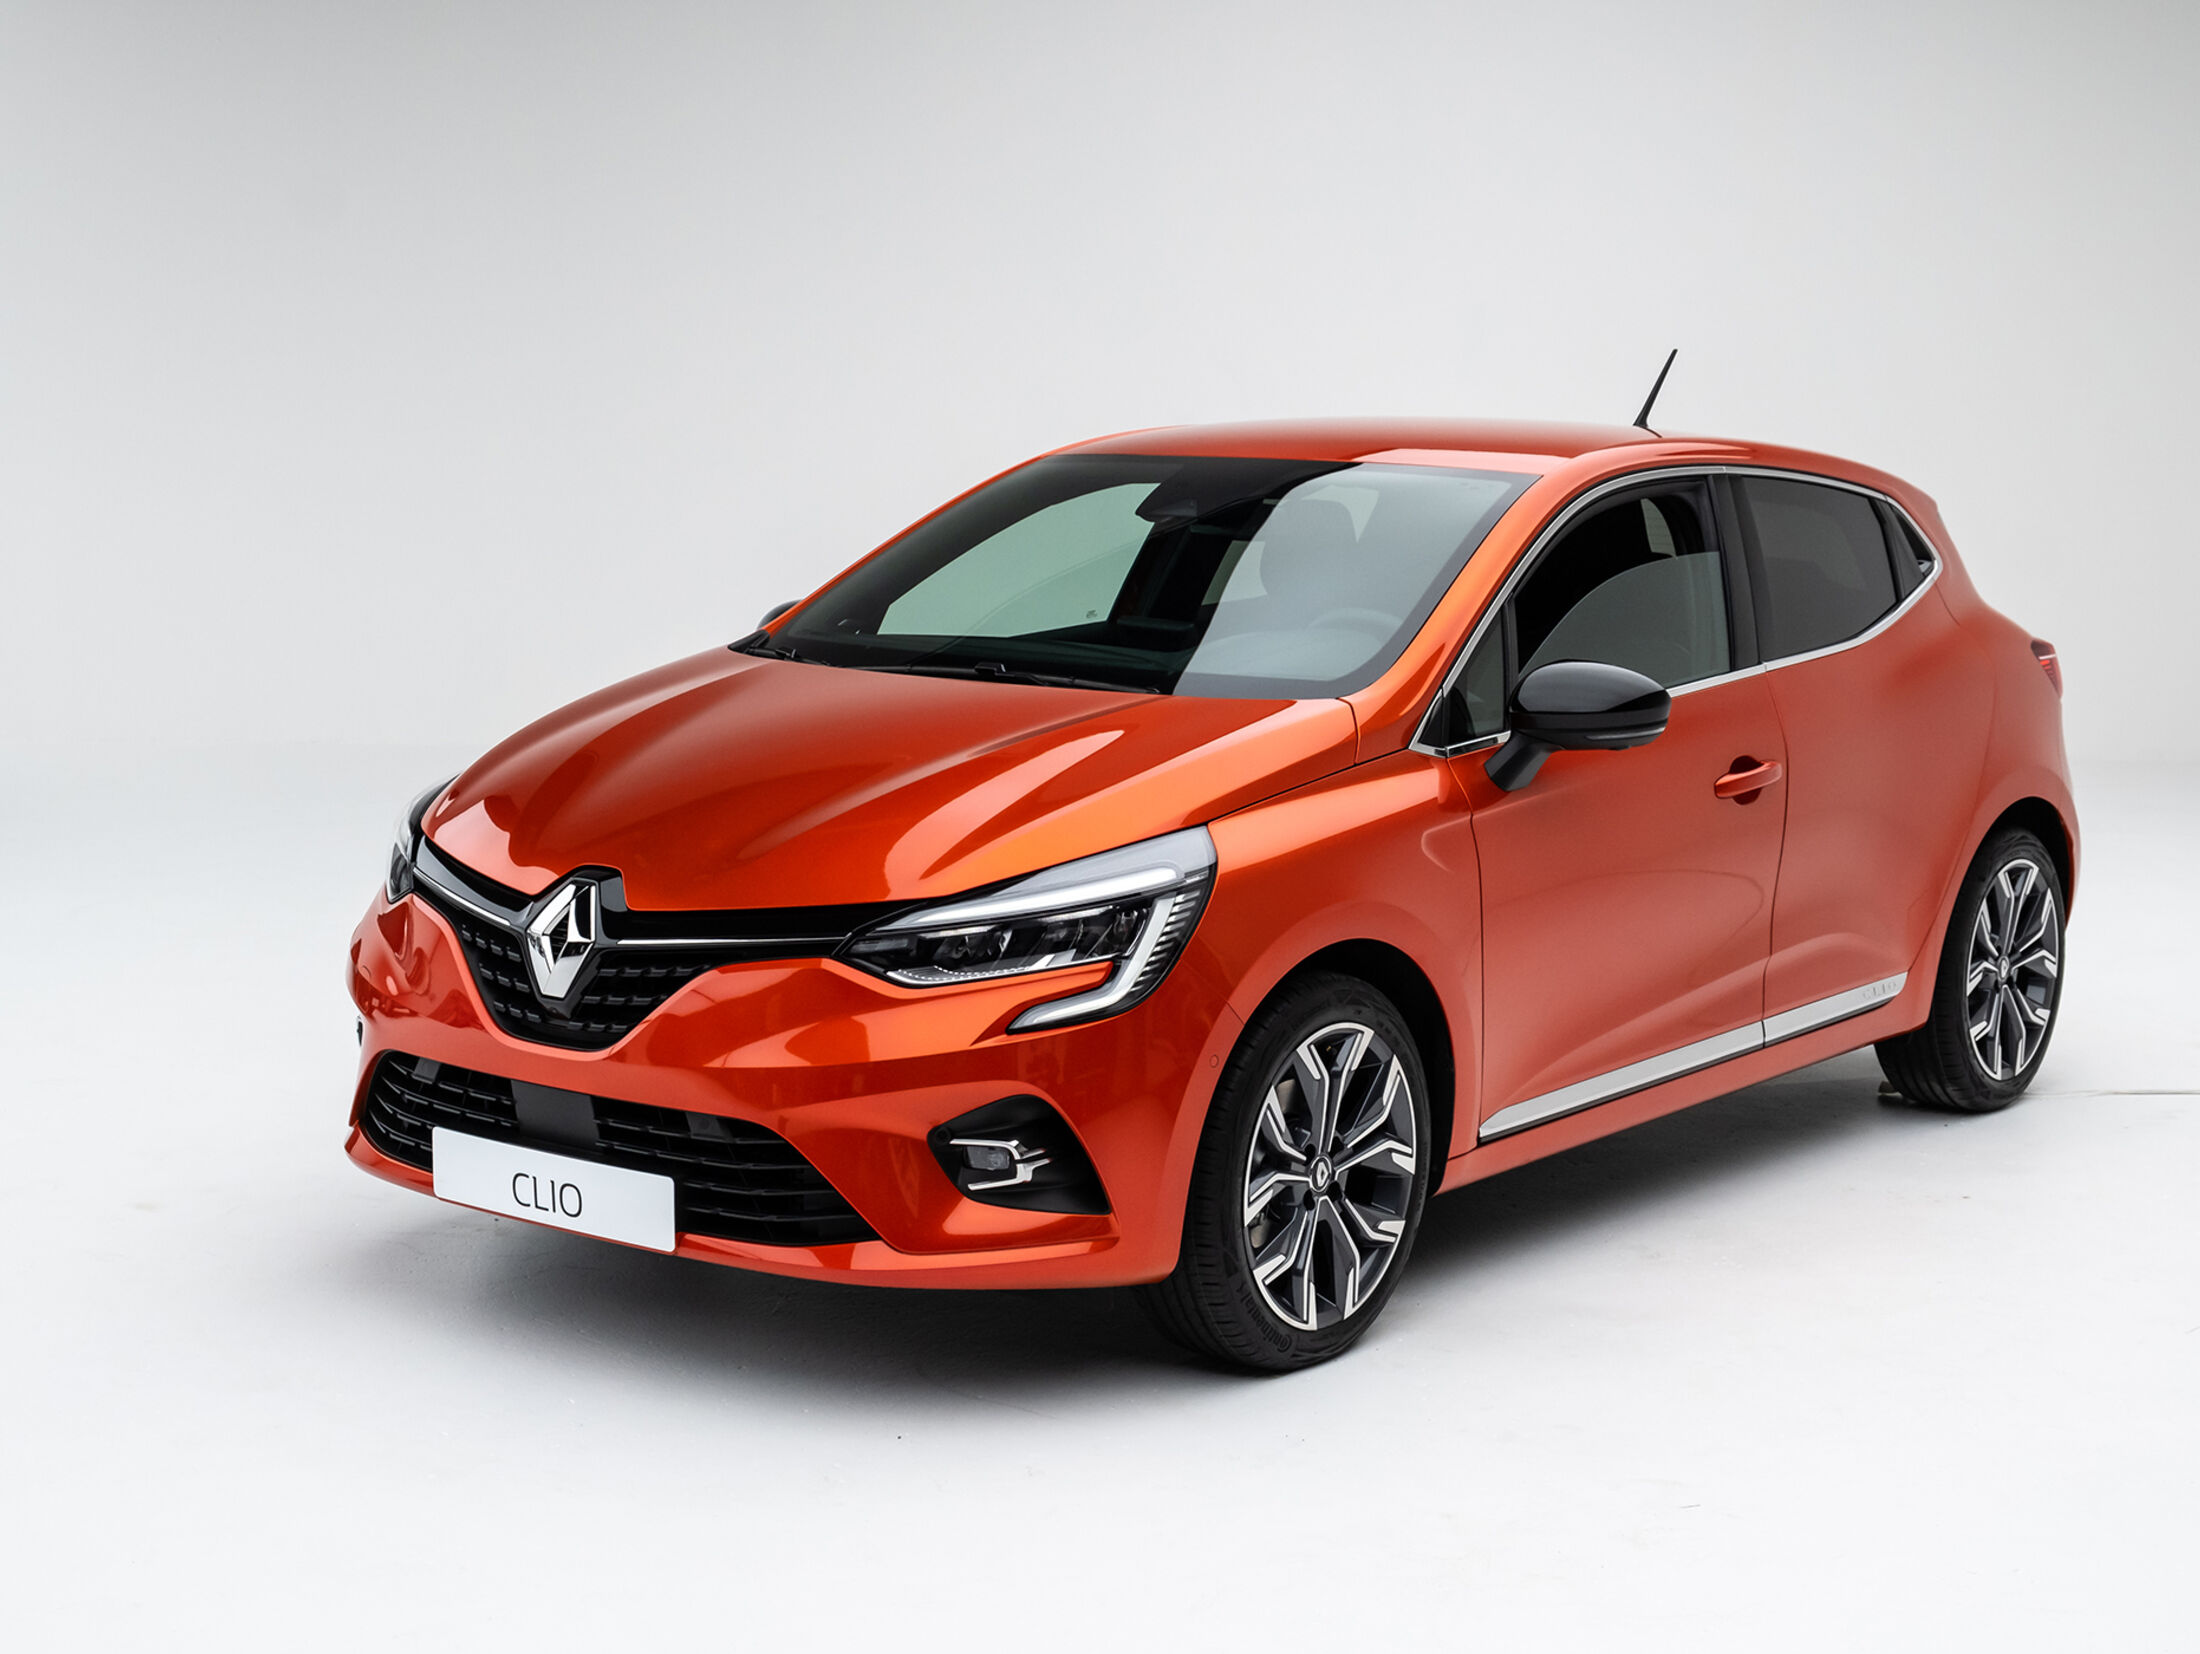 https://imgr1.auto-motor-und-sport.de/Renault-Clio-2019-jsonLd4x3-4e82c758-1432558.jpg